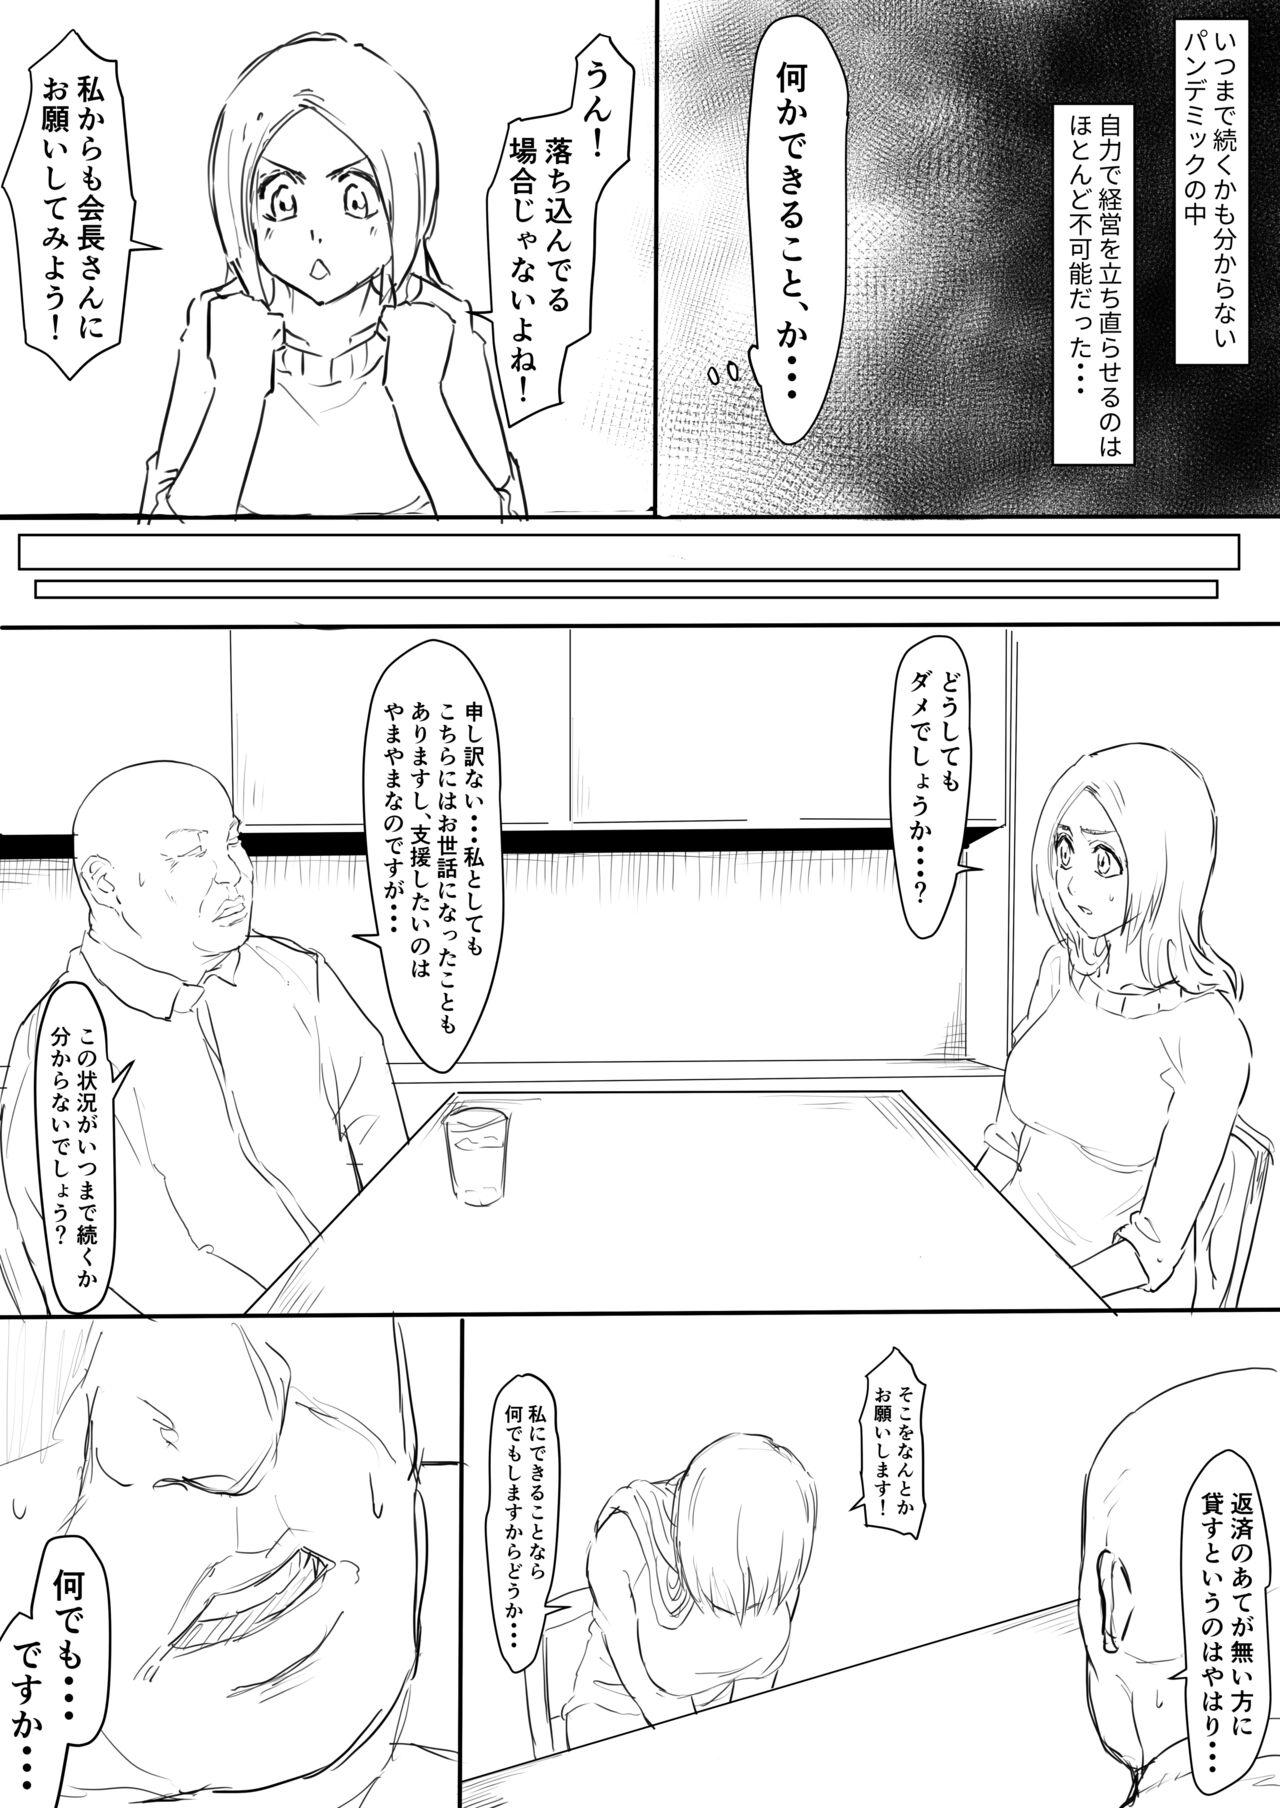 Gordibuena Orihime Manga - Bleach Sfm - Page 2